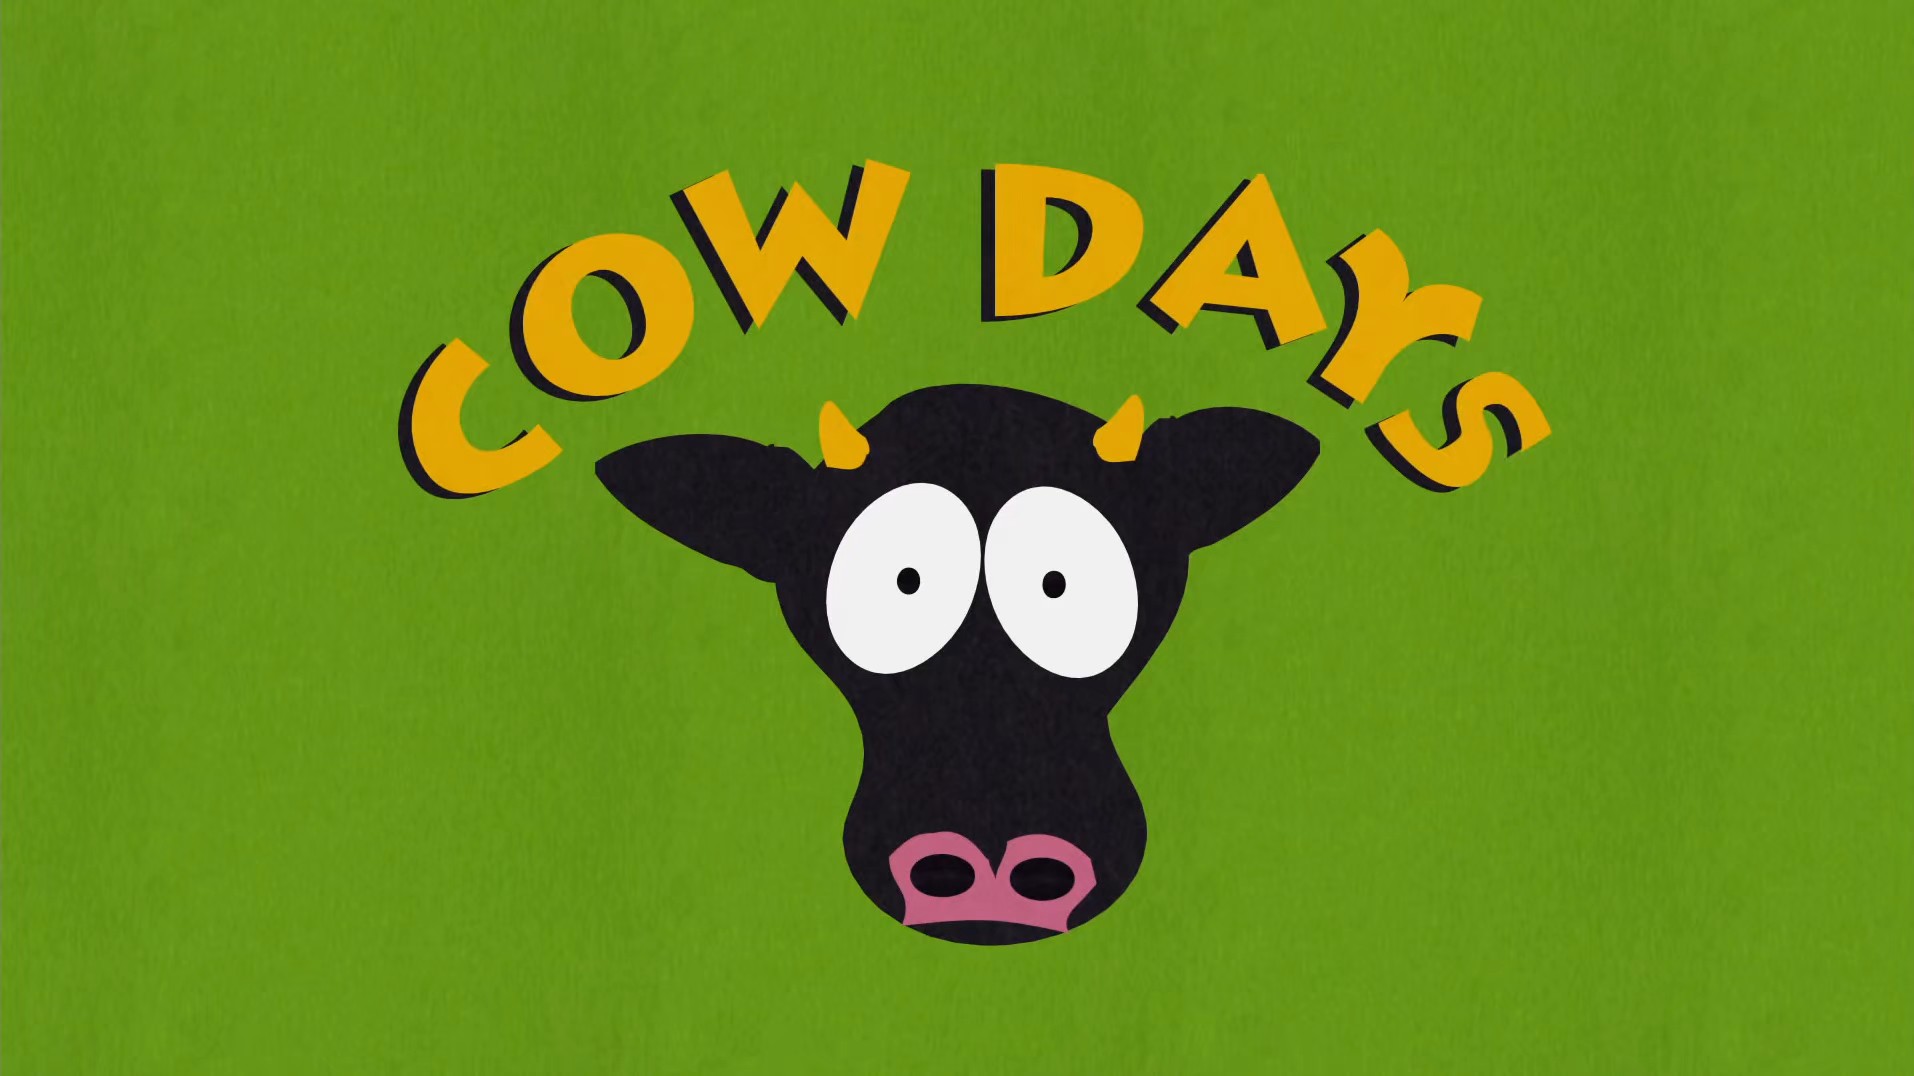 Cow Days